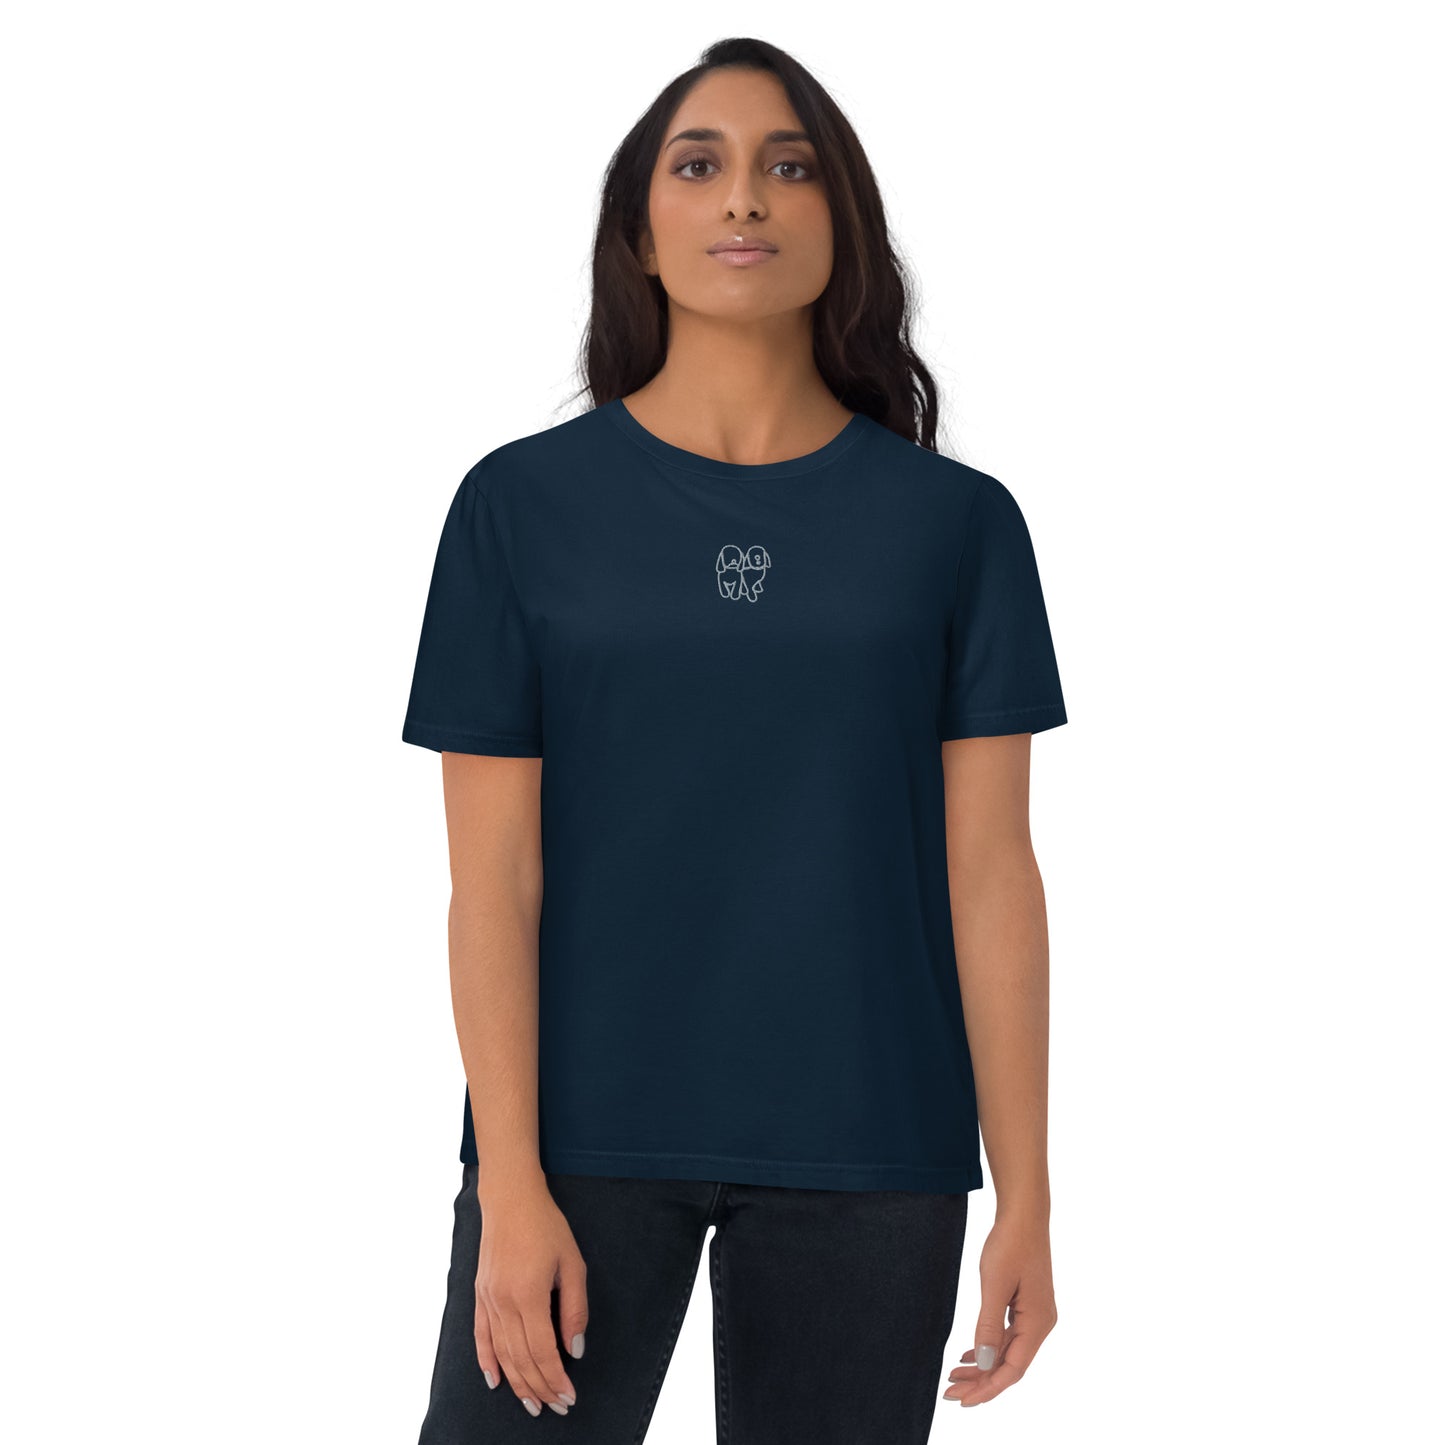 Unisex organic cotton t-shirt Nvy/silver